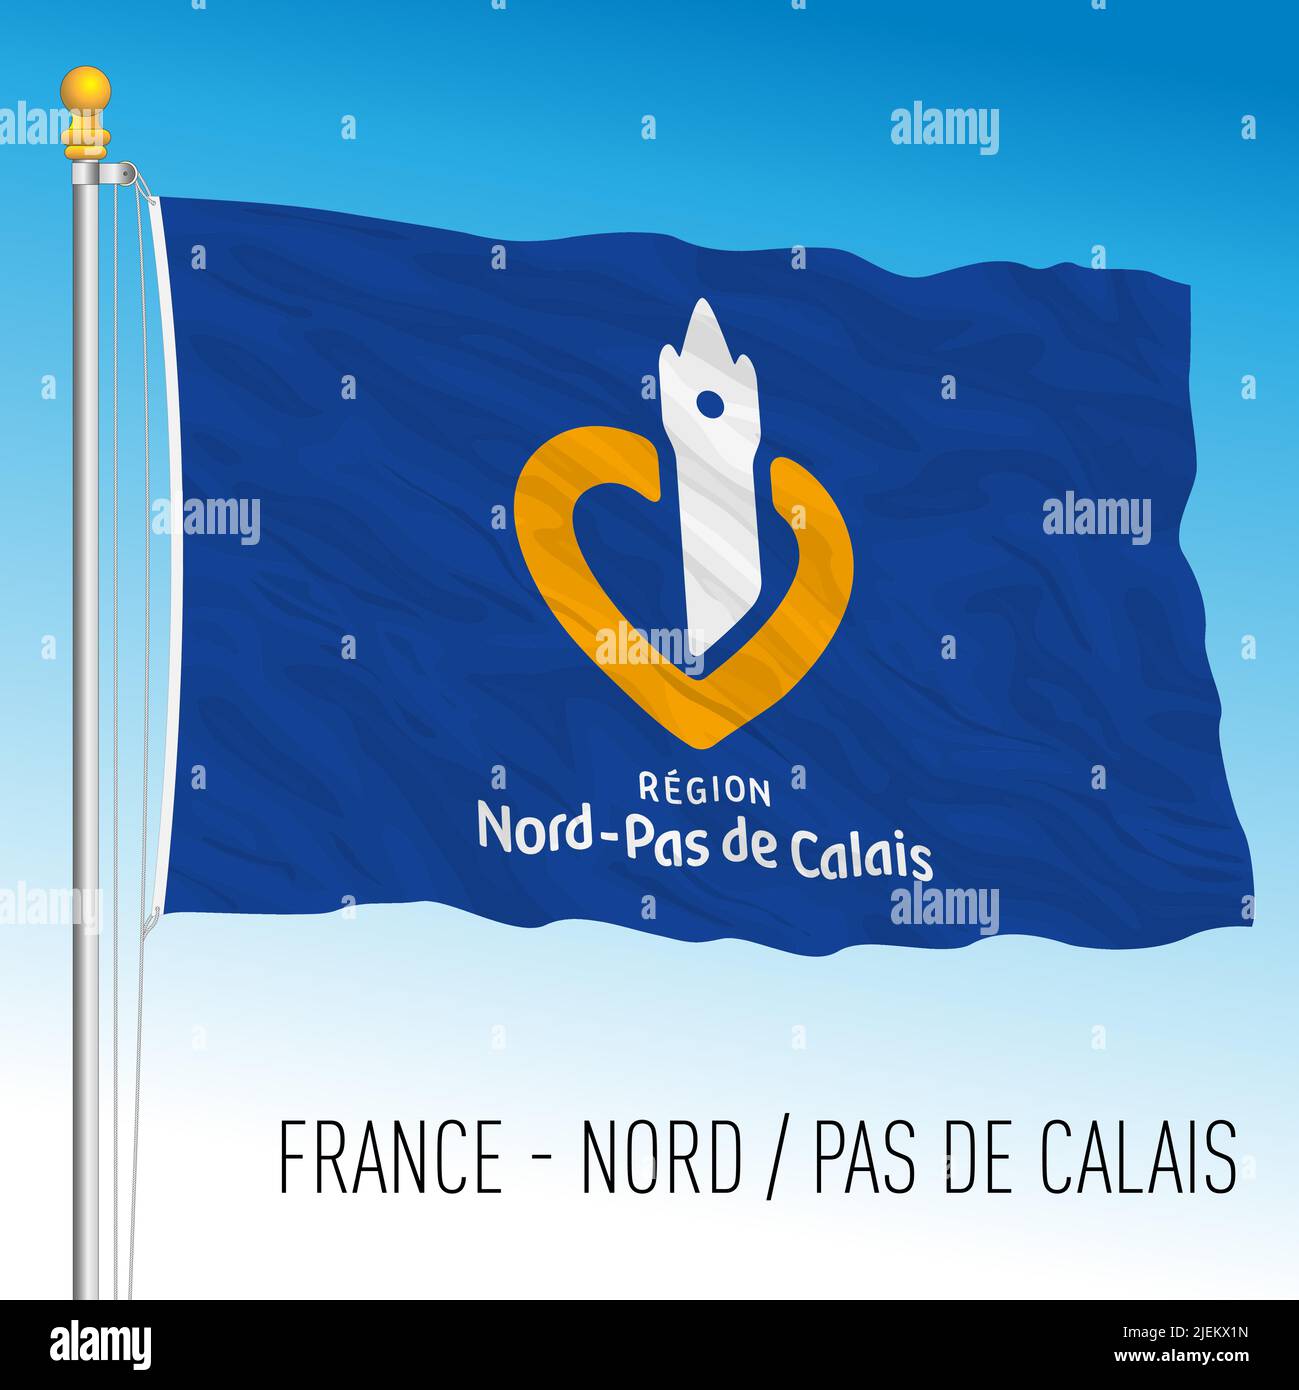 North - Pas de Calais regional flag, France, European Union, vector illustration Stock Vector